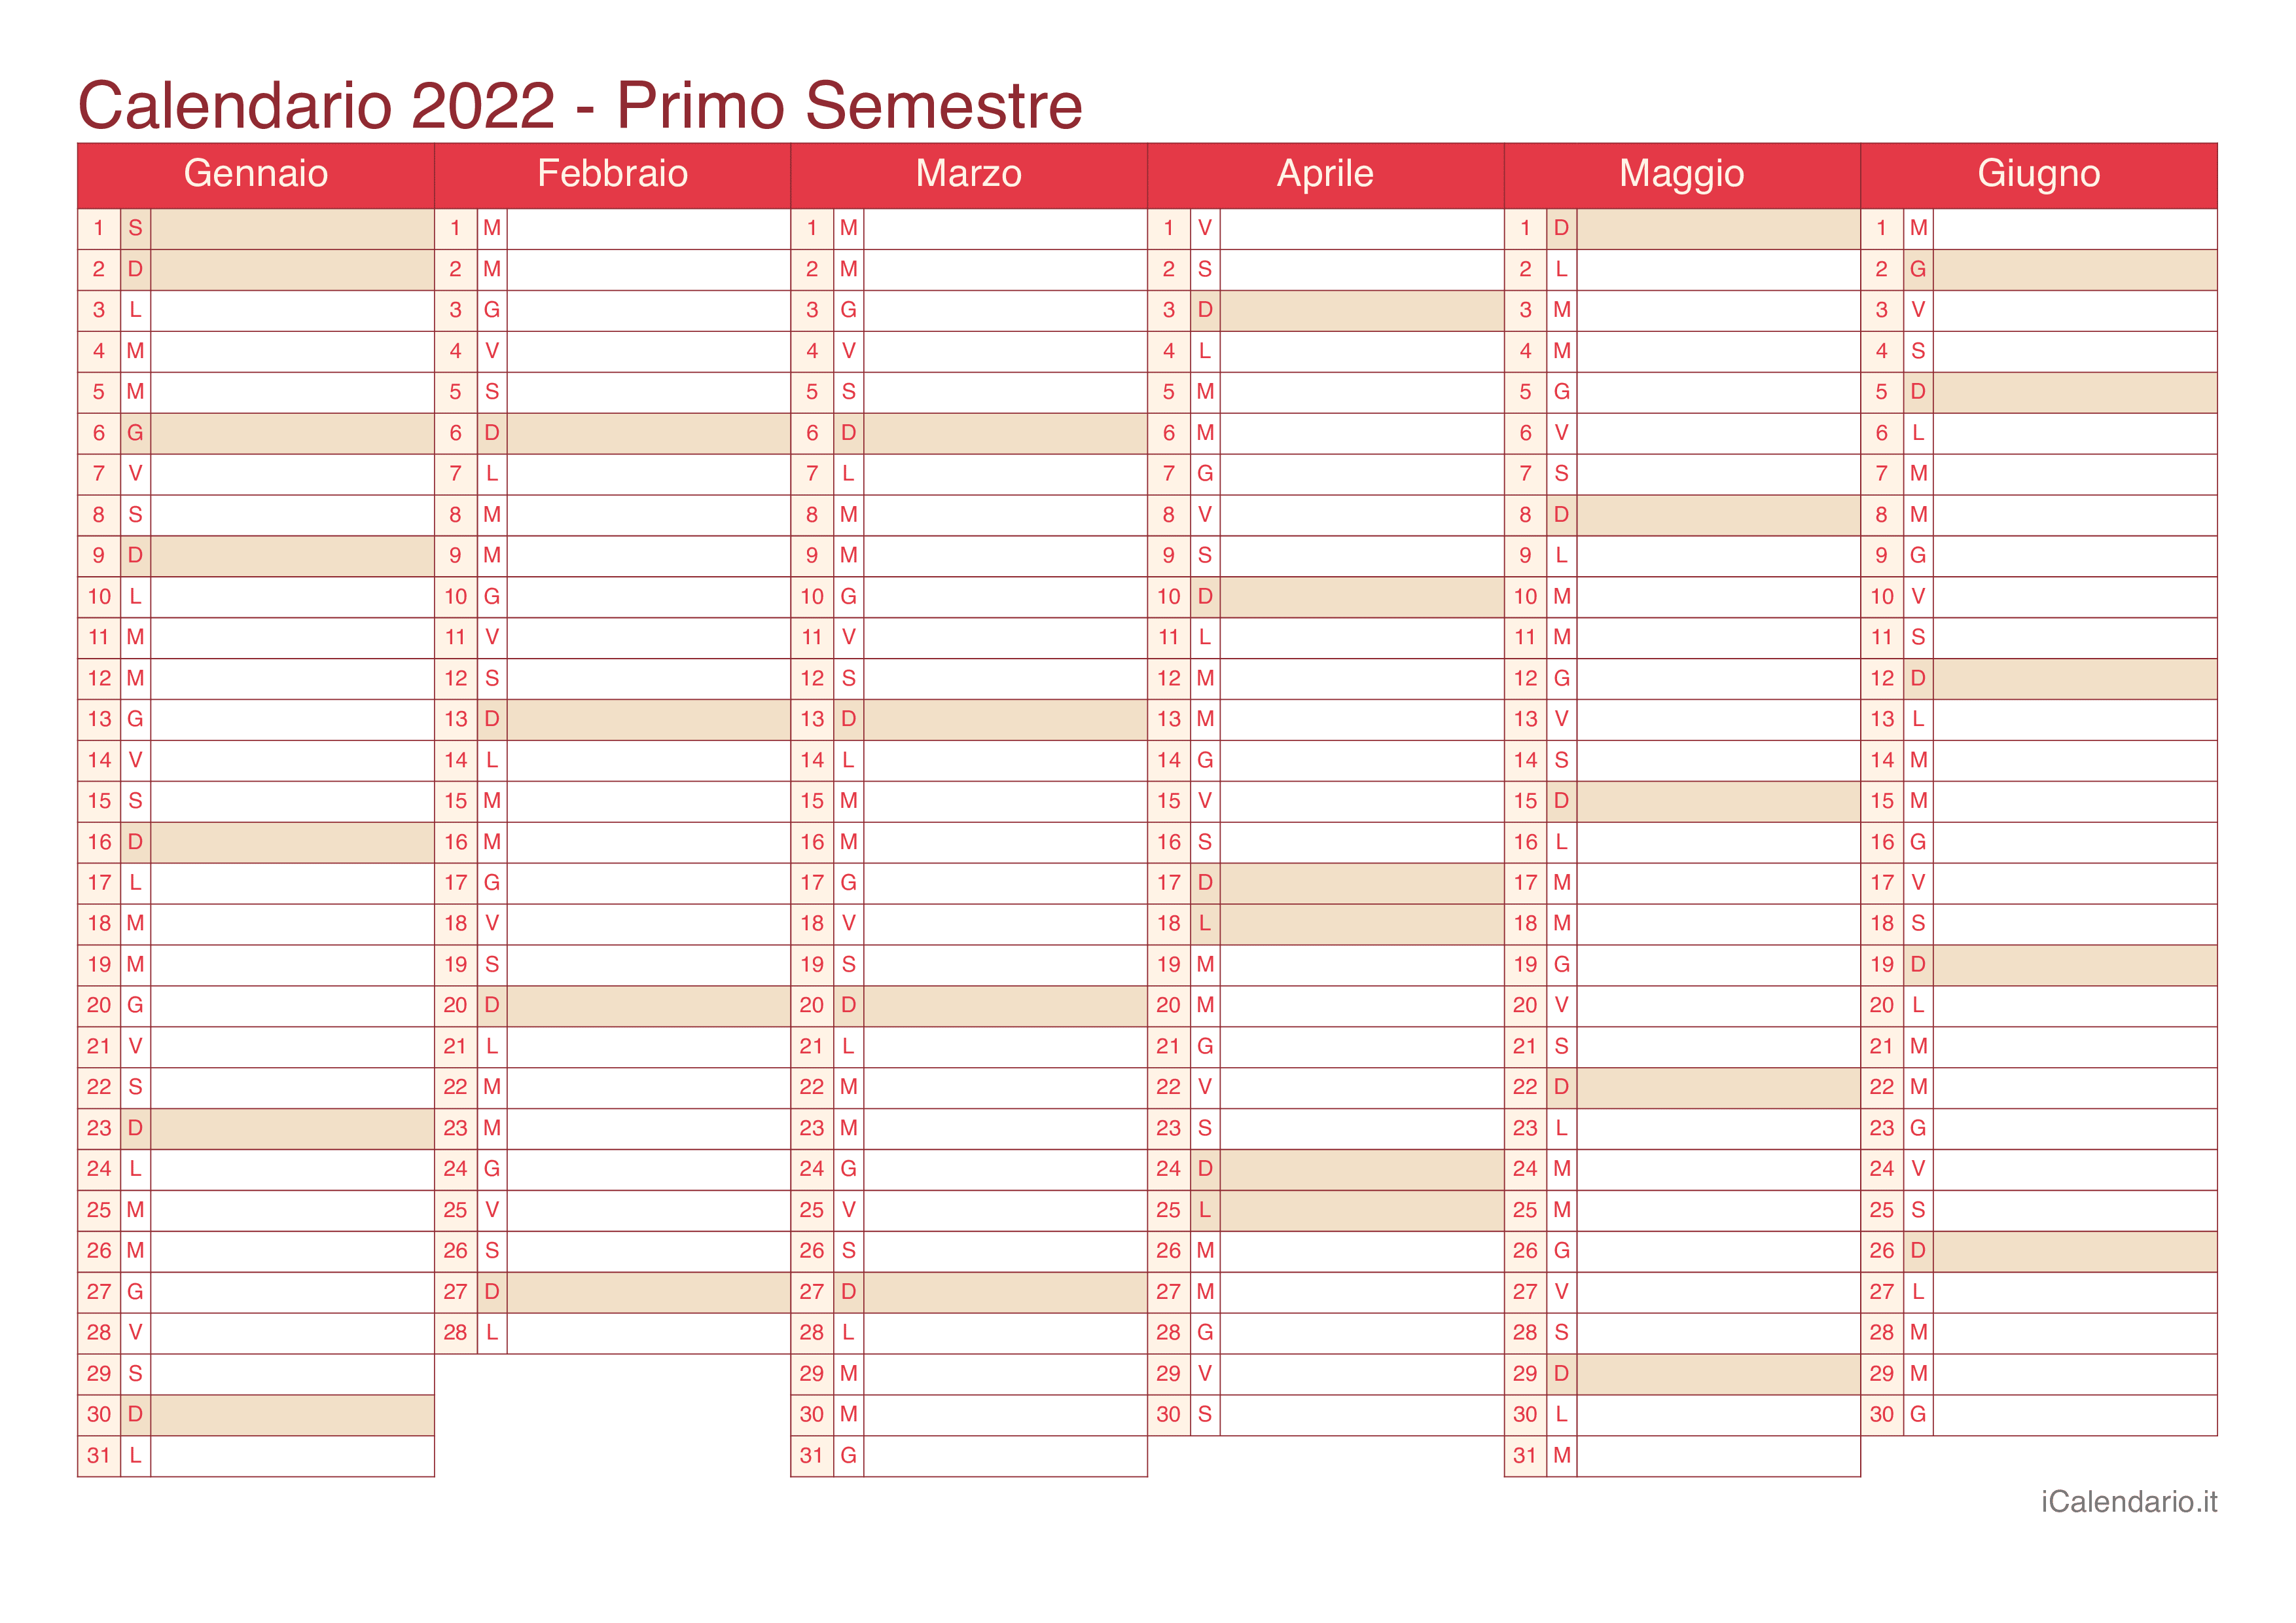 Calendario semestrale 2022 - Cherry